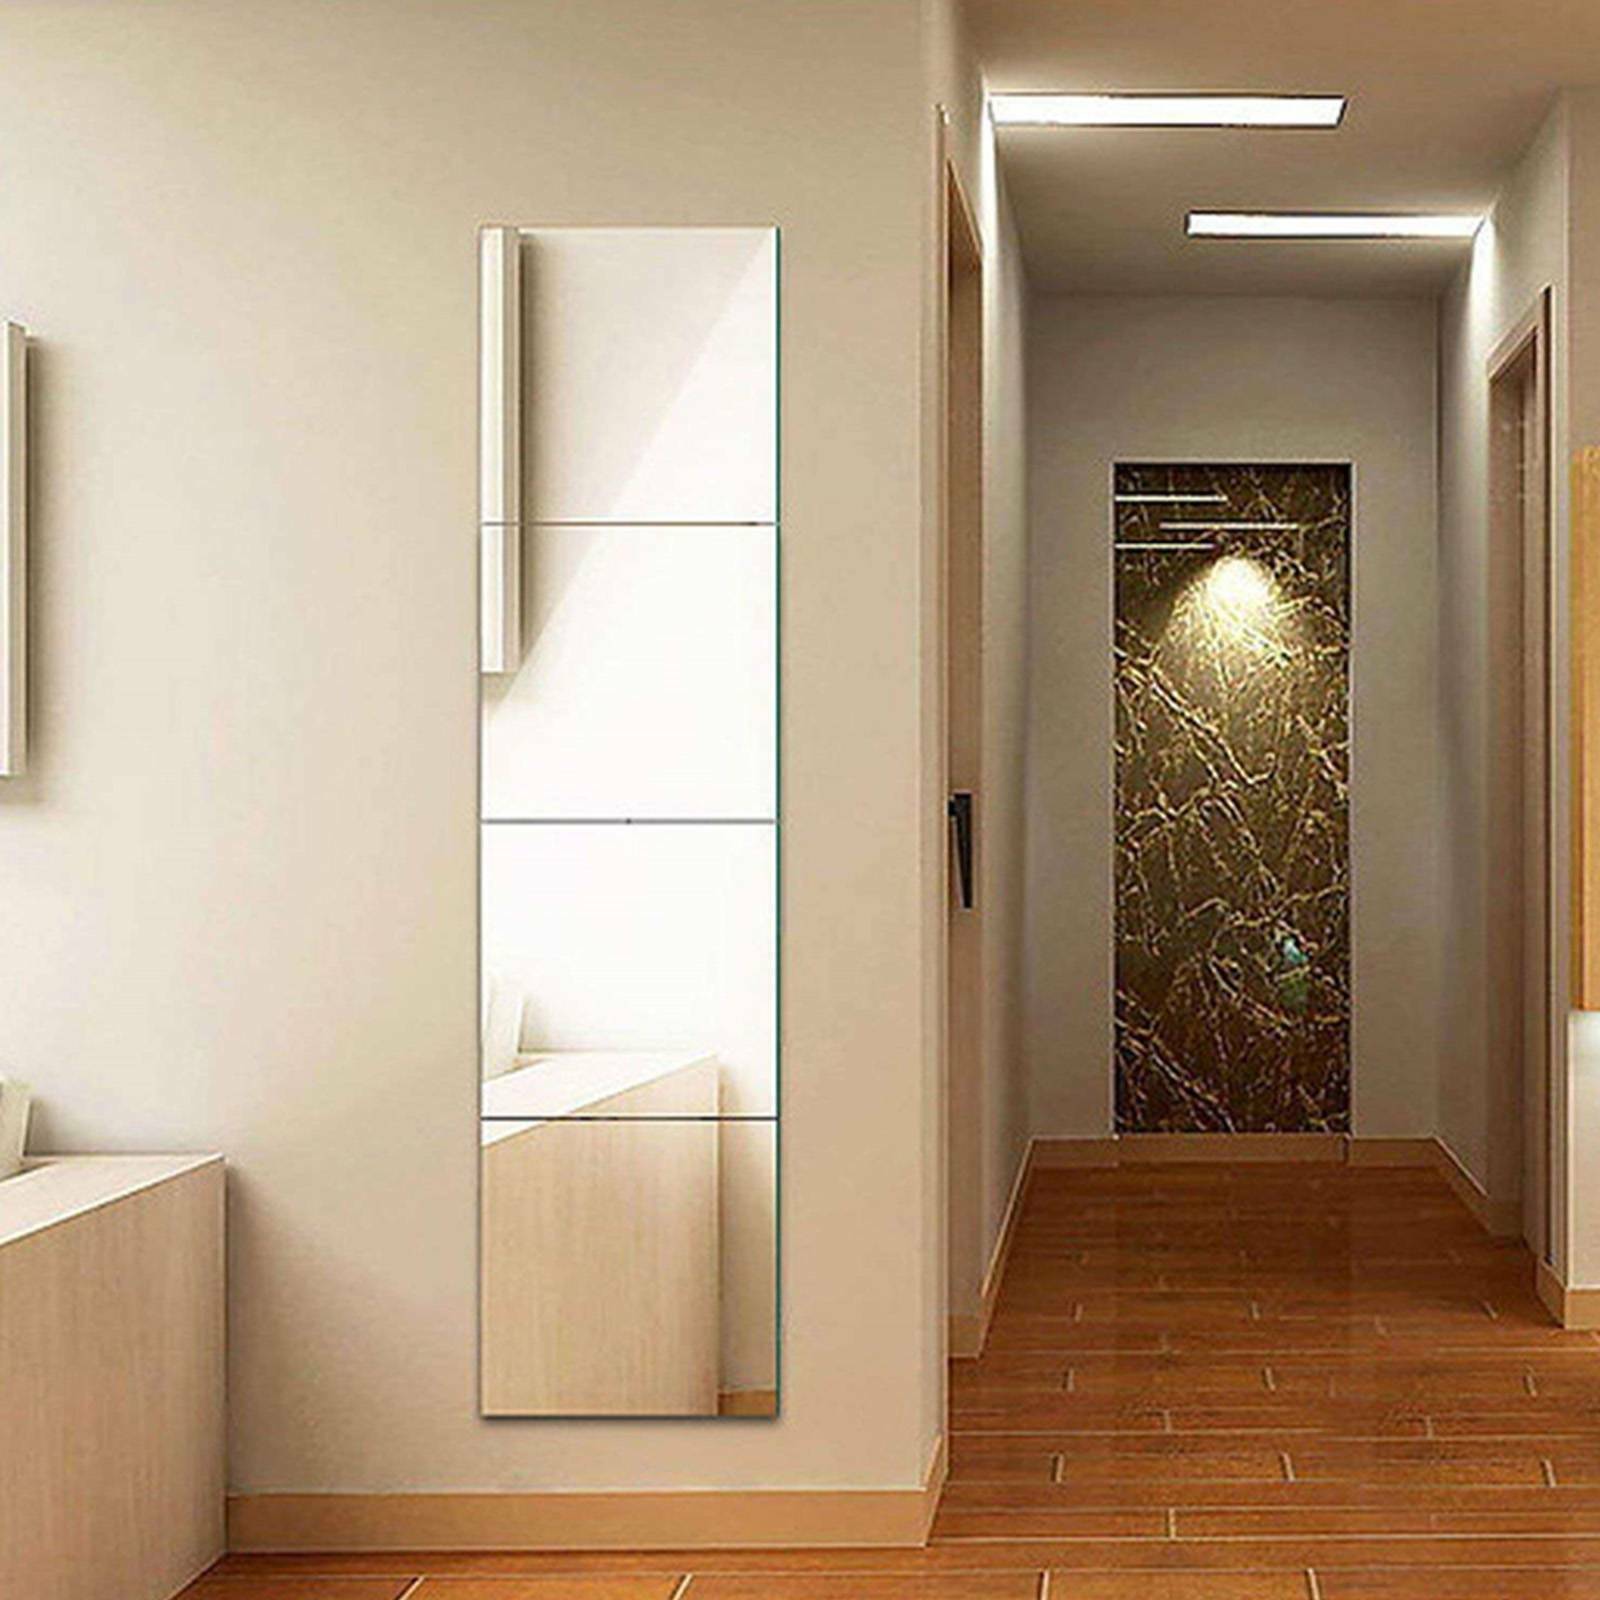 4X Glass Mirror Tiles Wall Sticker Square Self Adhesive Stick On Art Home Decor